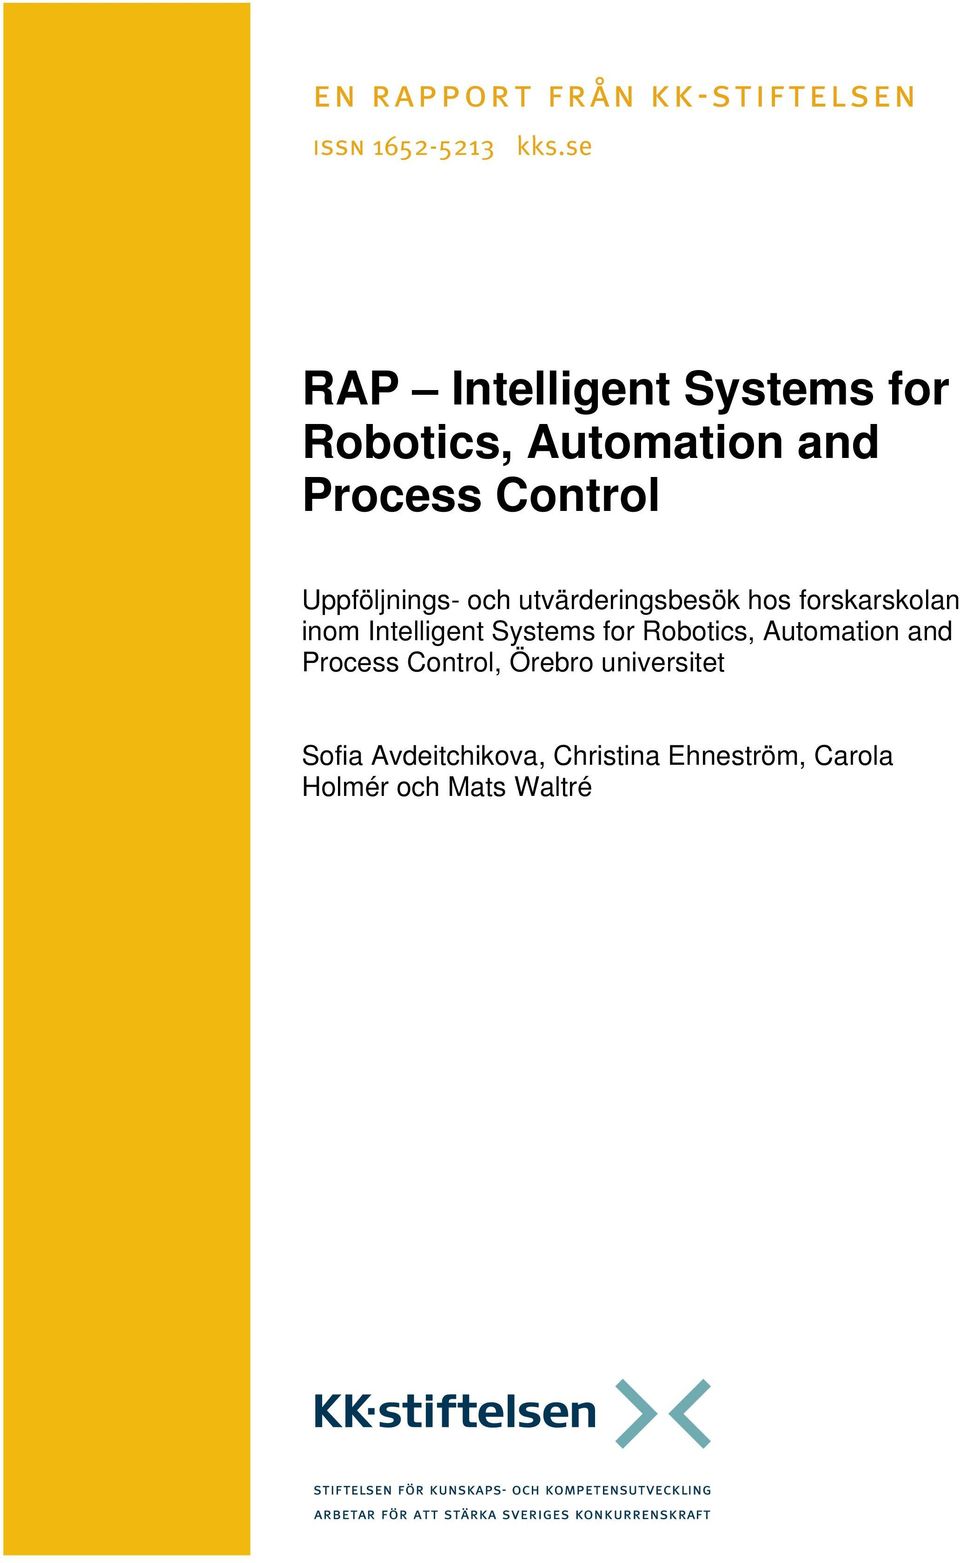 Systems for Robotics, Automation and Process Control, Örebro